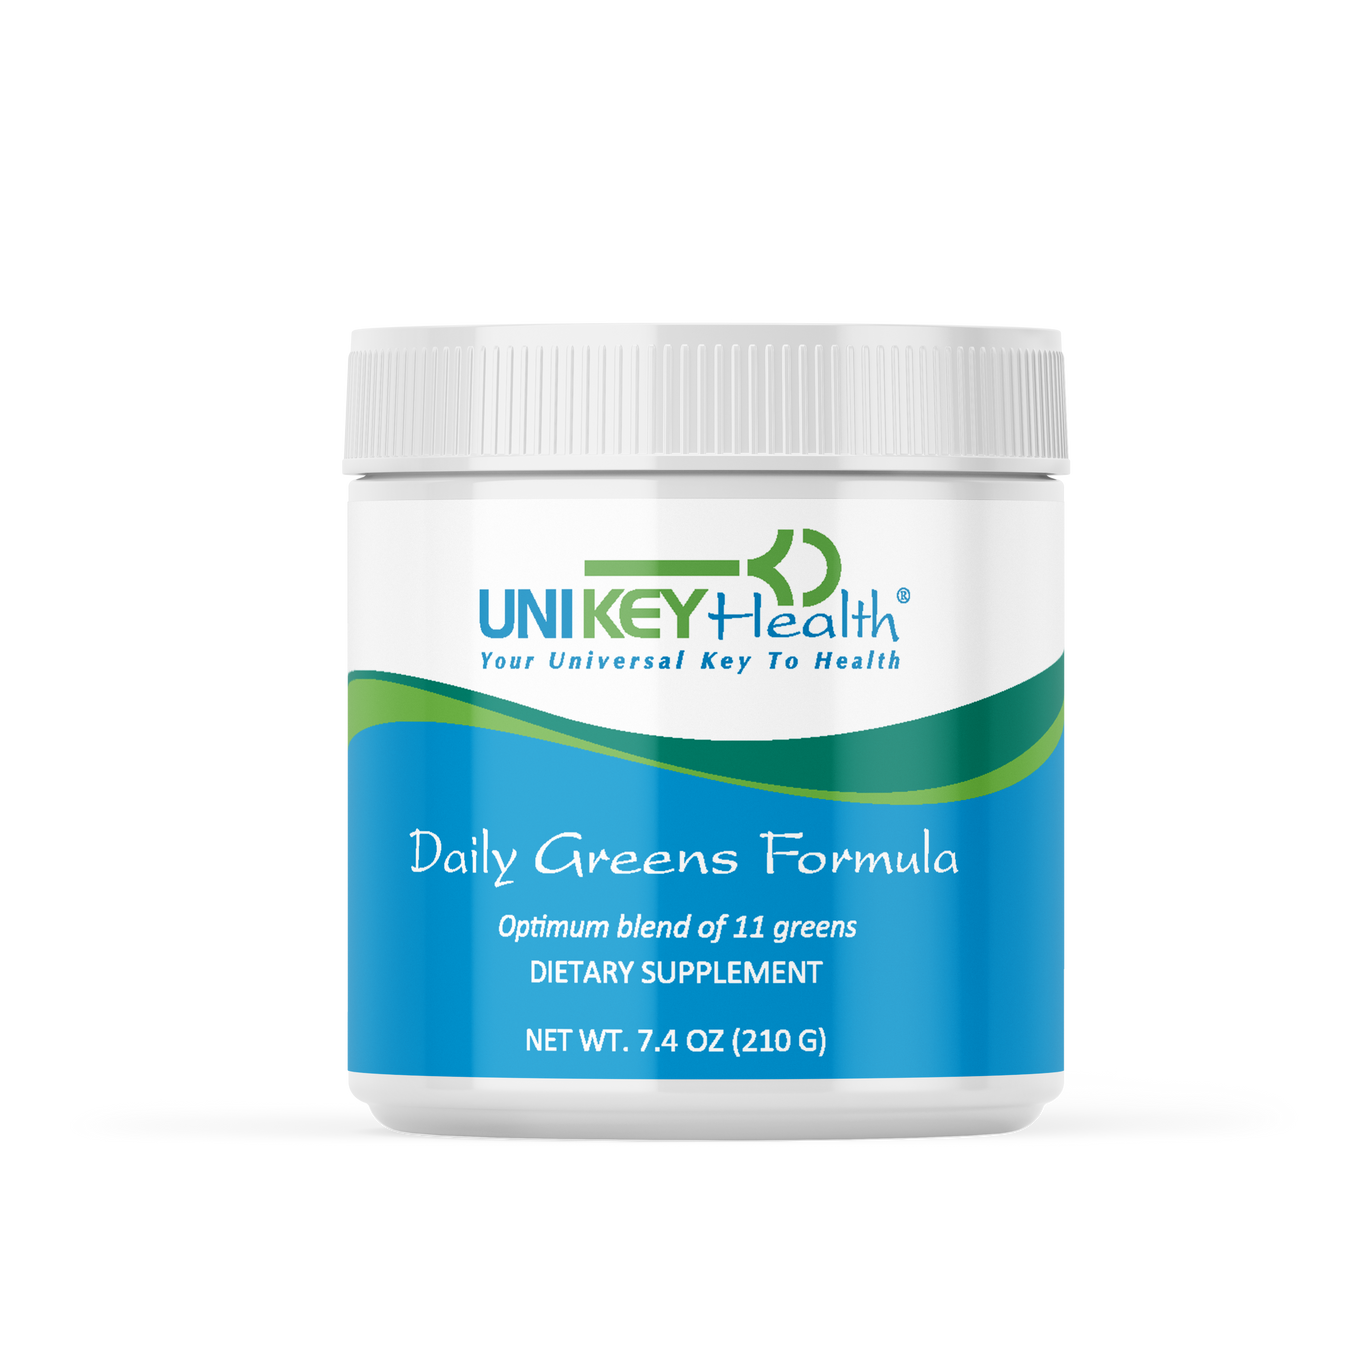 Buy Daily Greens Formula, Get Immune Formula FREE!